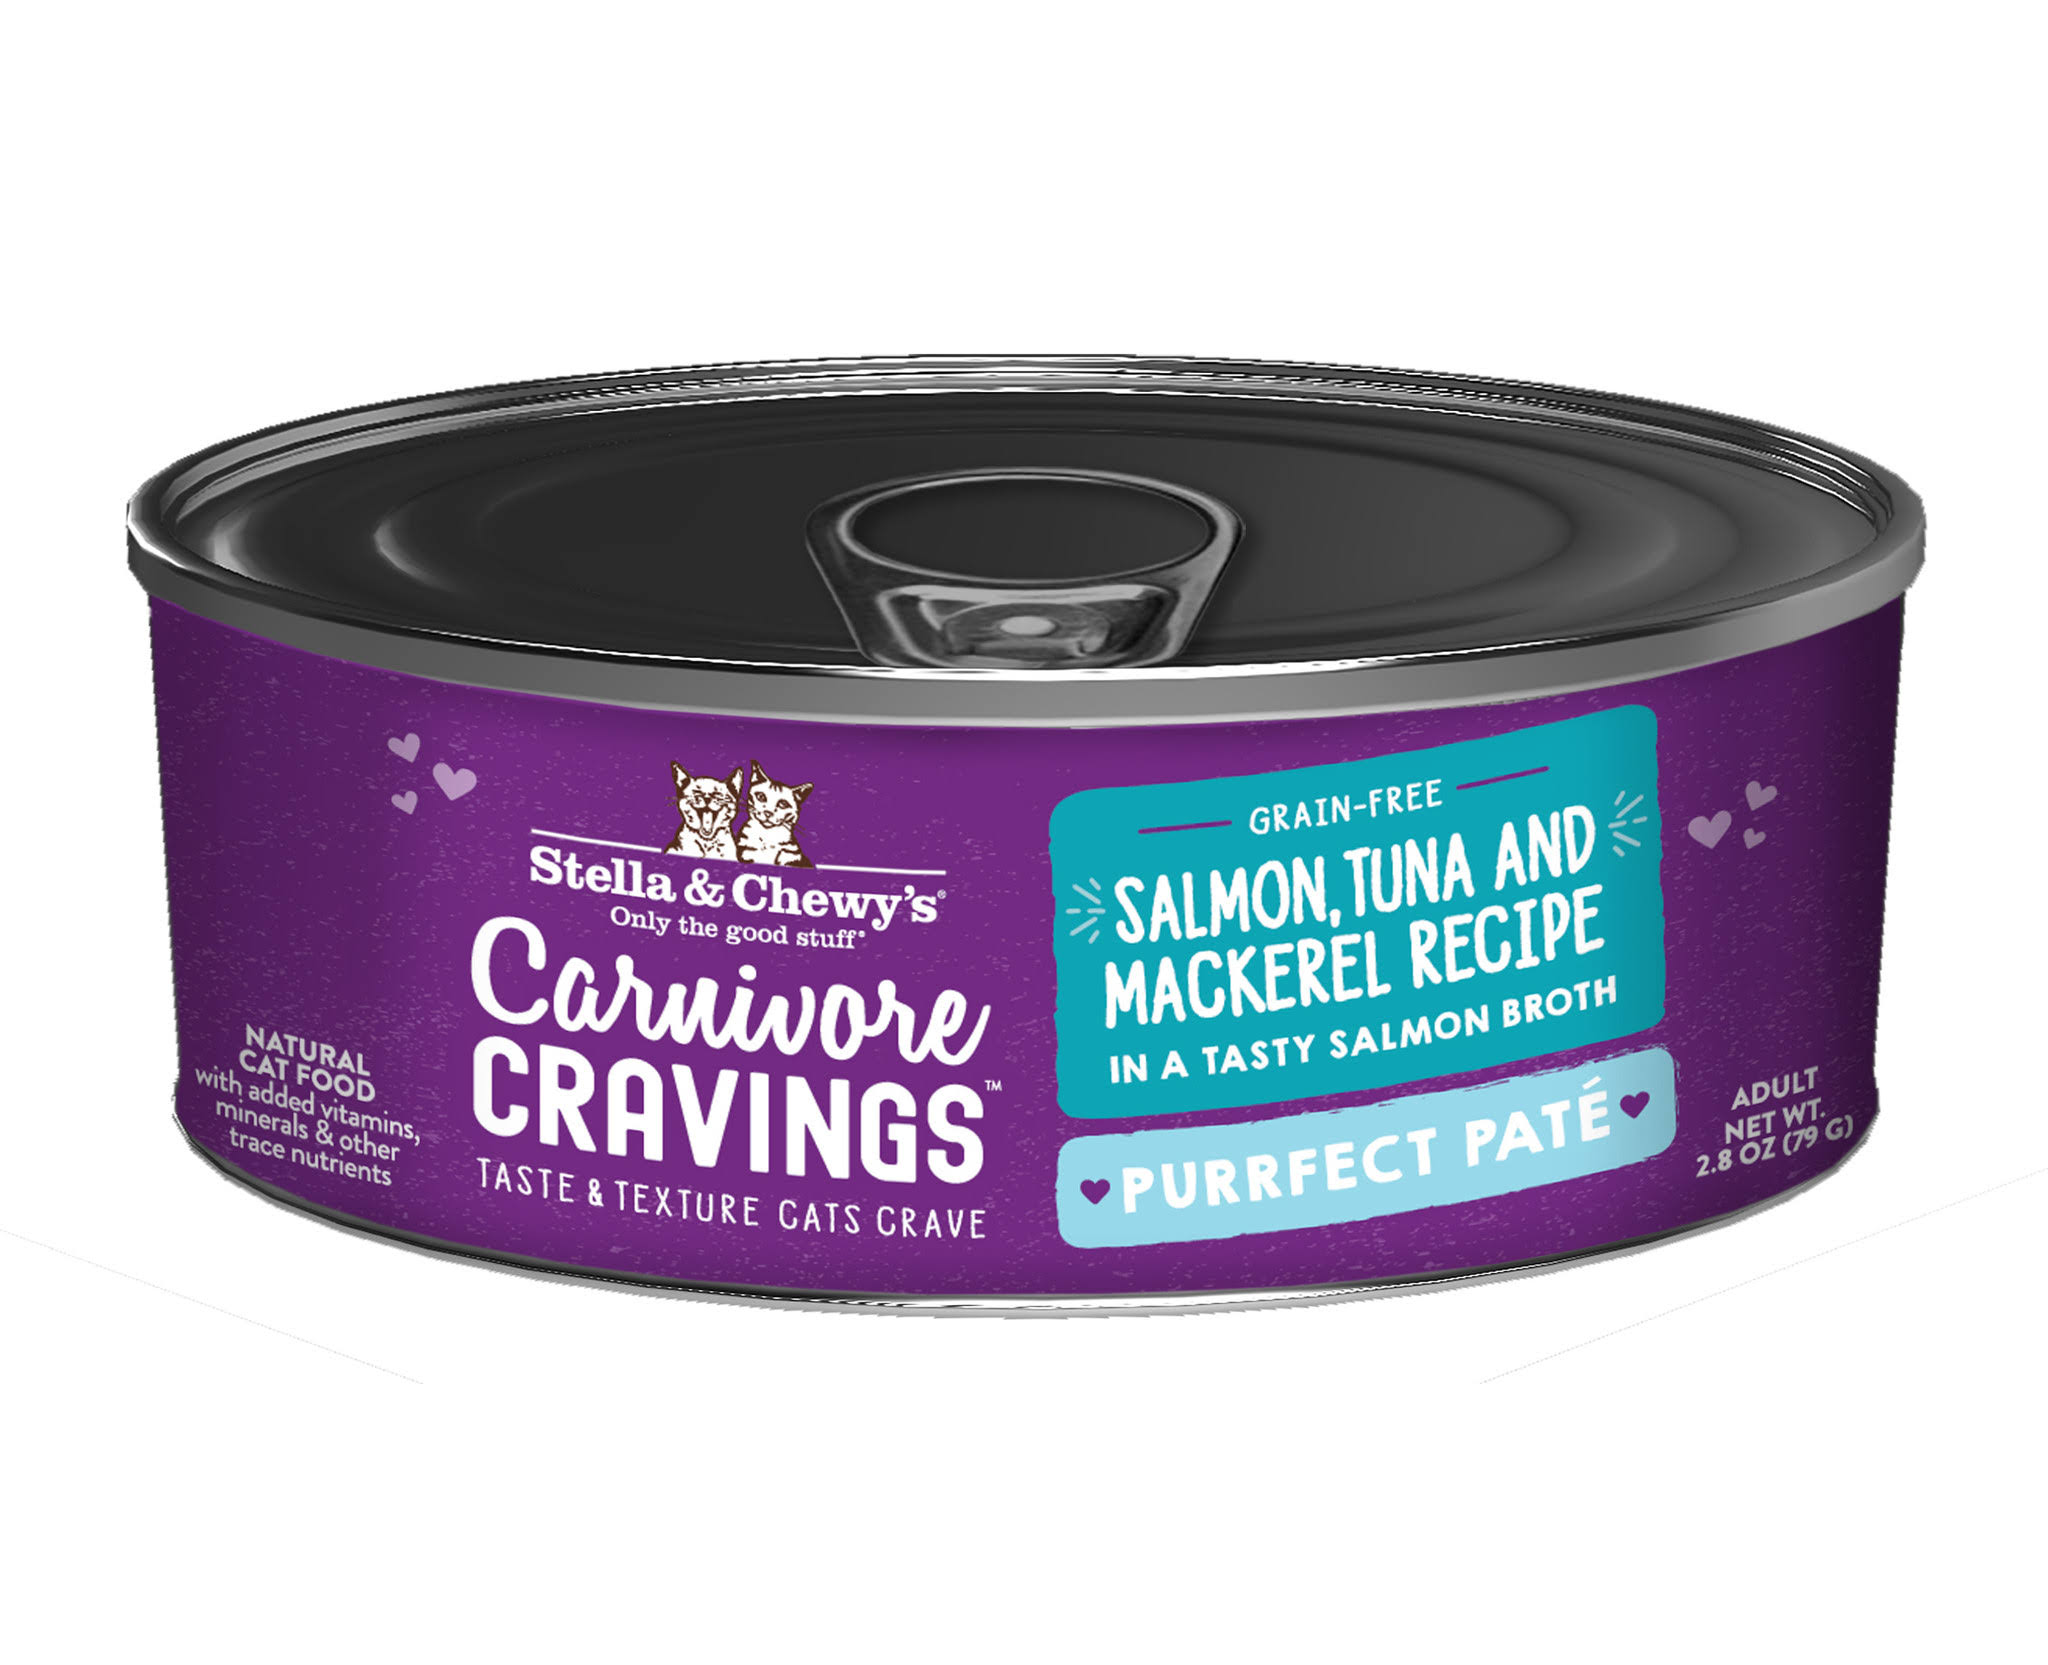 Stella & Chewy's 2.8oz Carnivore Cravings Salmon, Tuna, Mackerel Pate